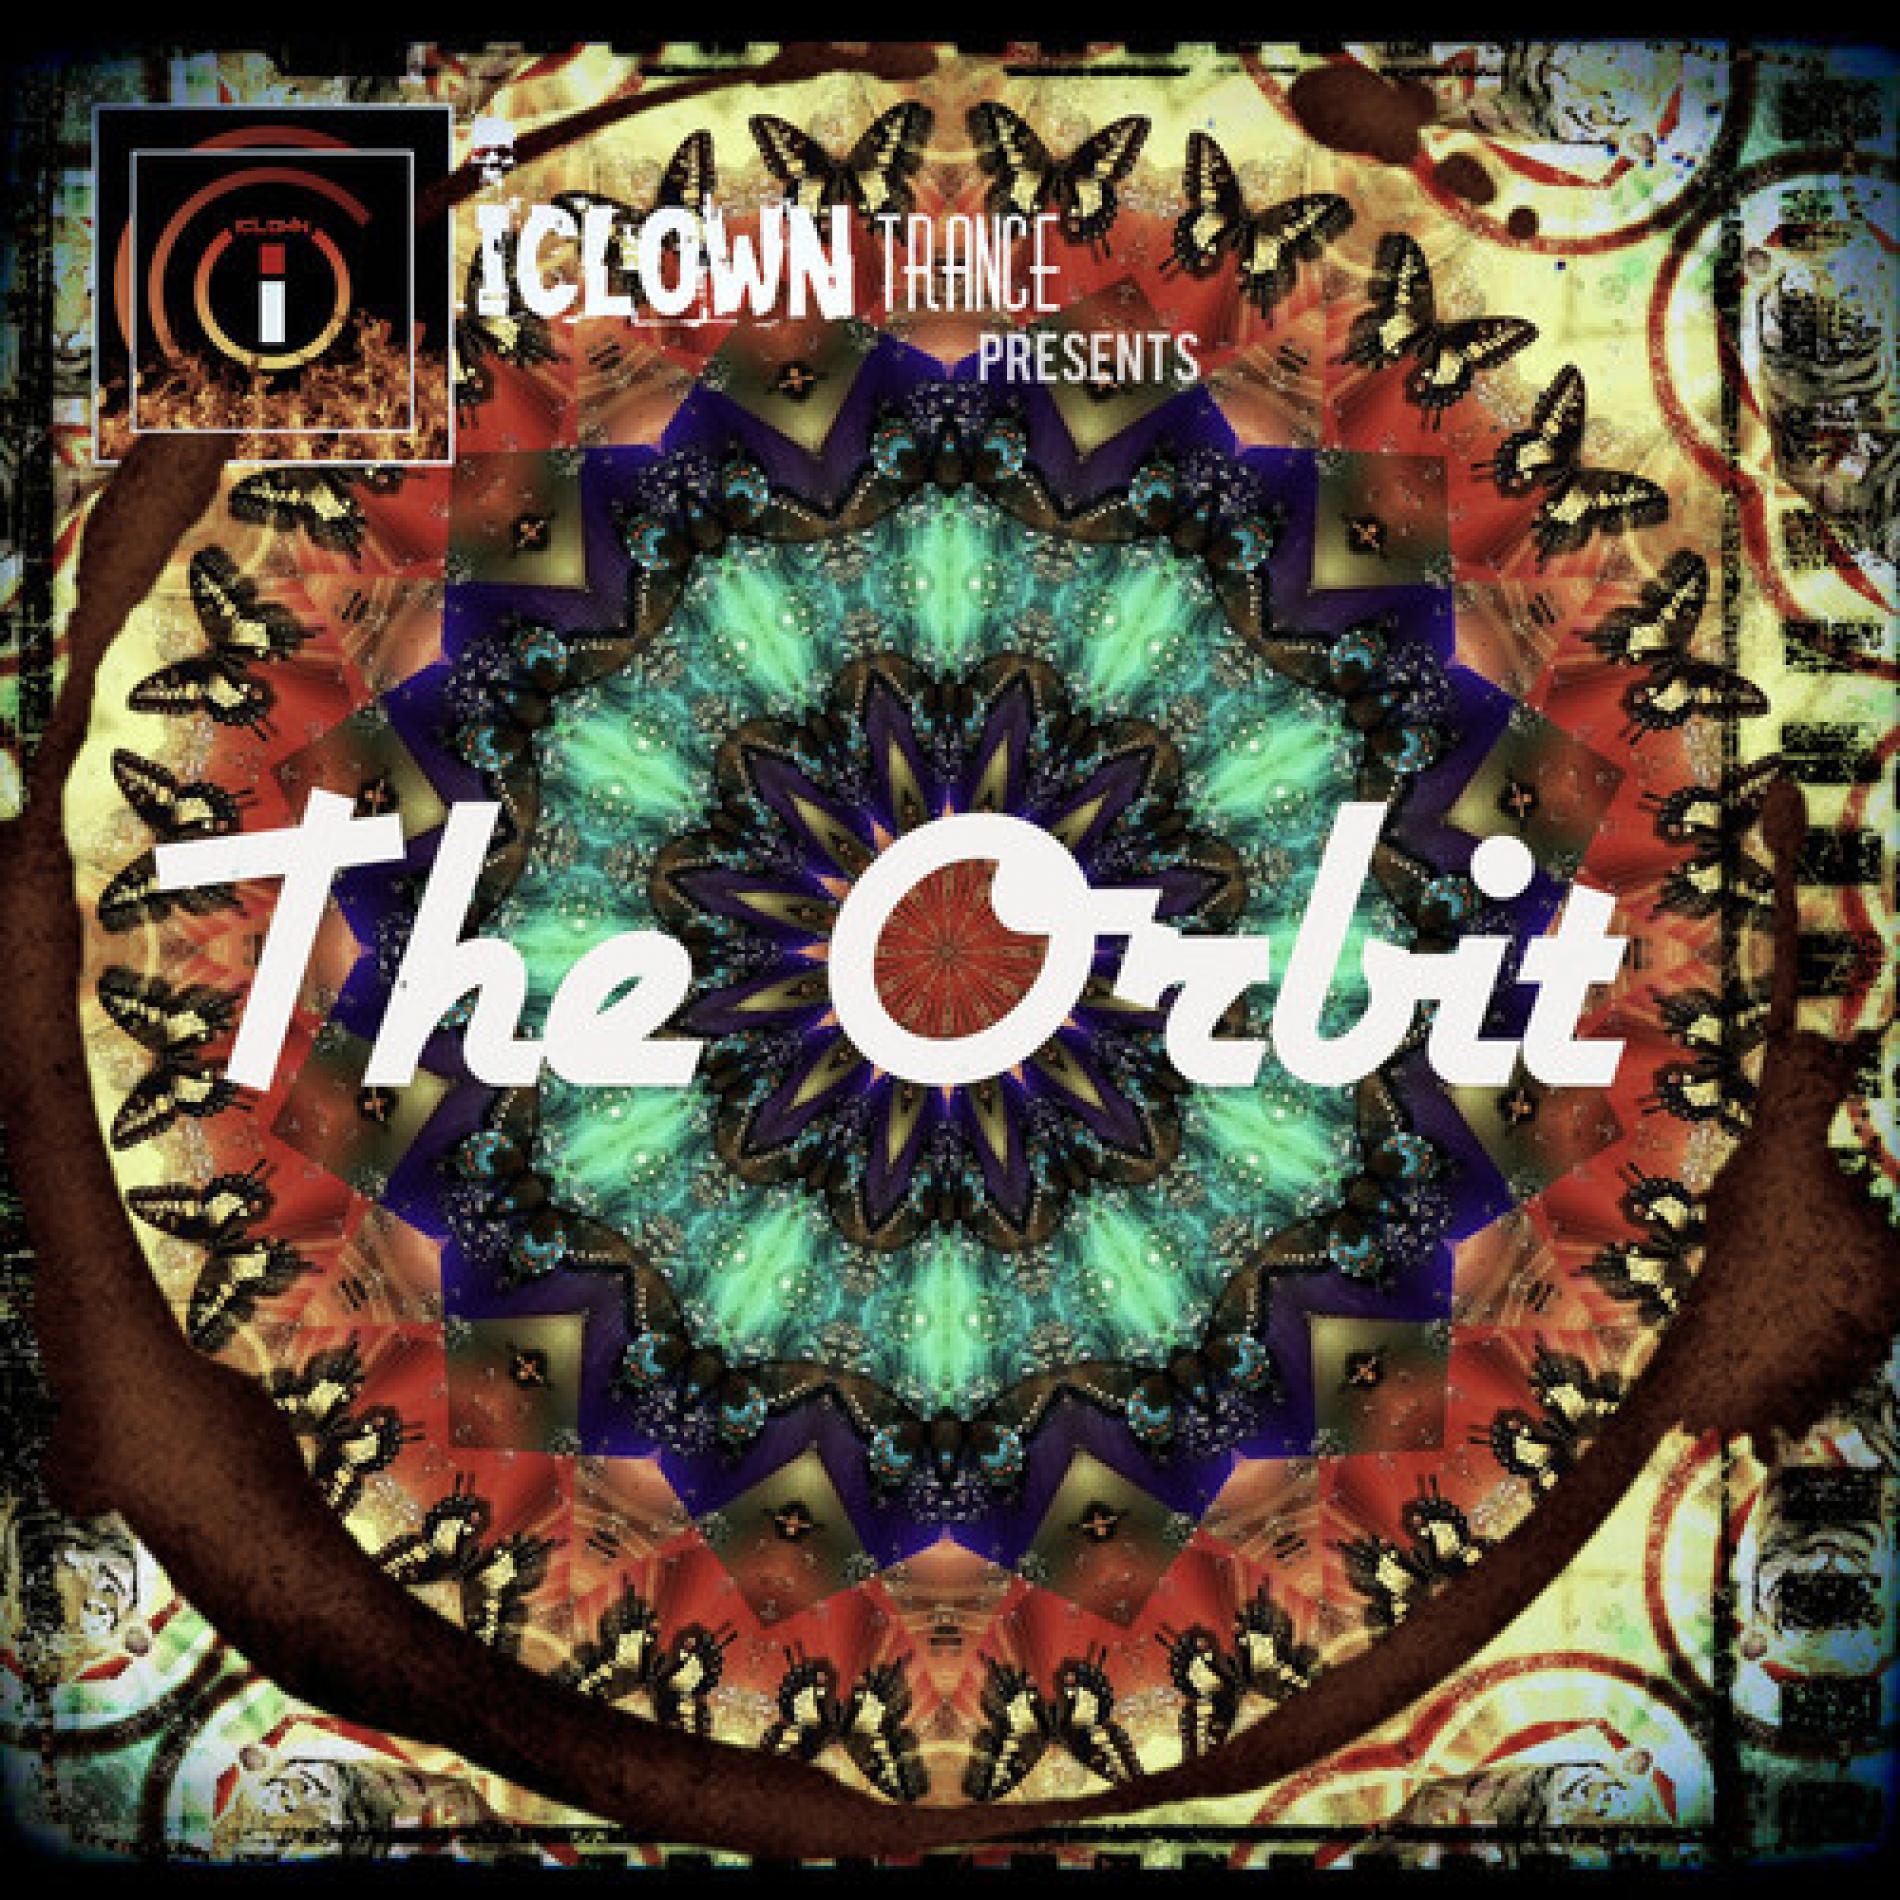 iClown: Orbit